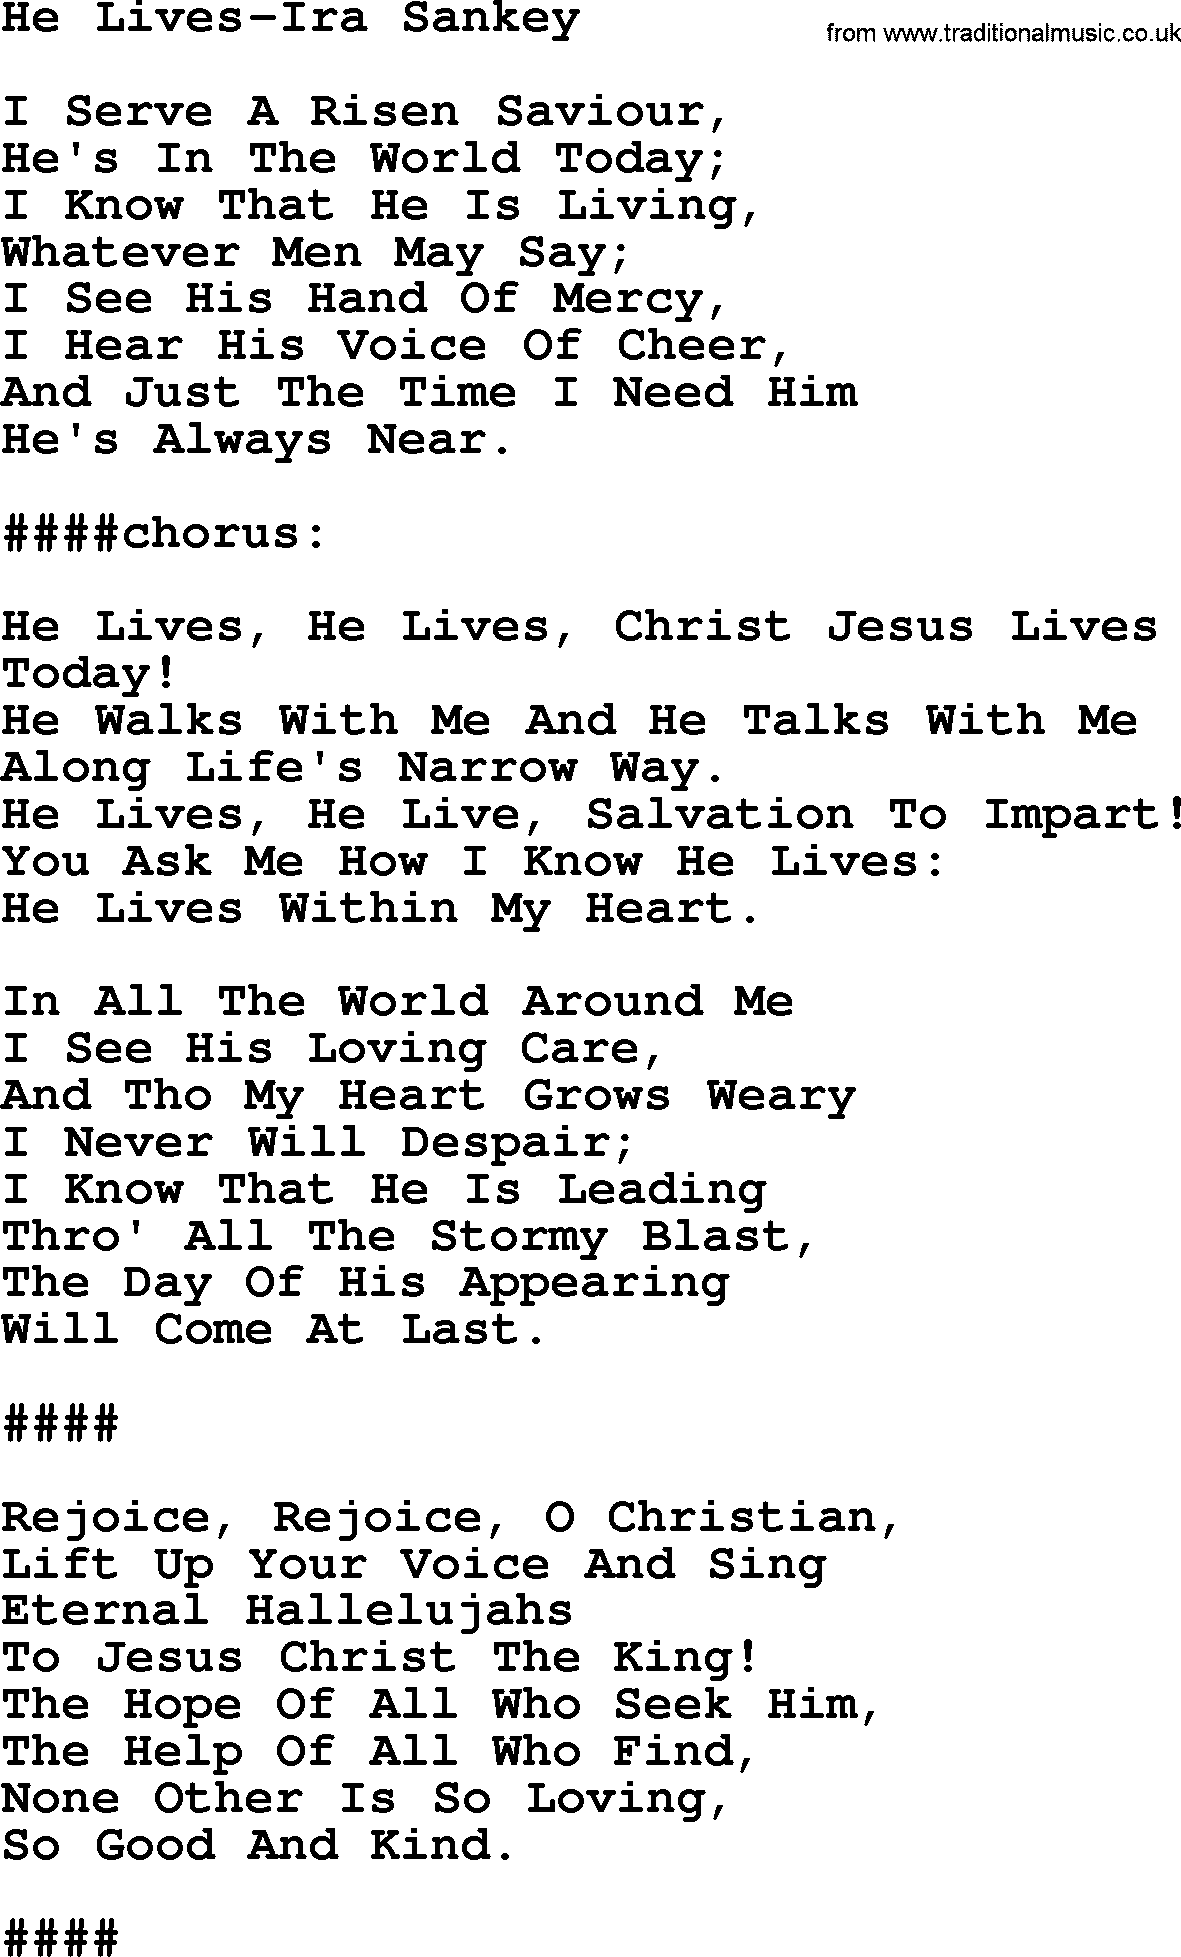 Ira Sankey hymn: He Lives-Ira Sankey, lyrics